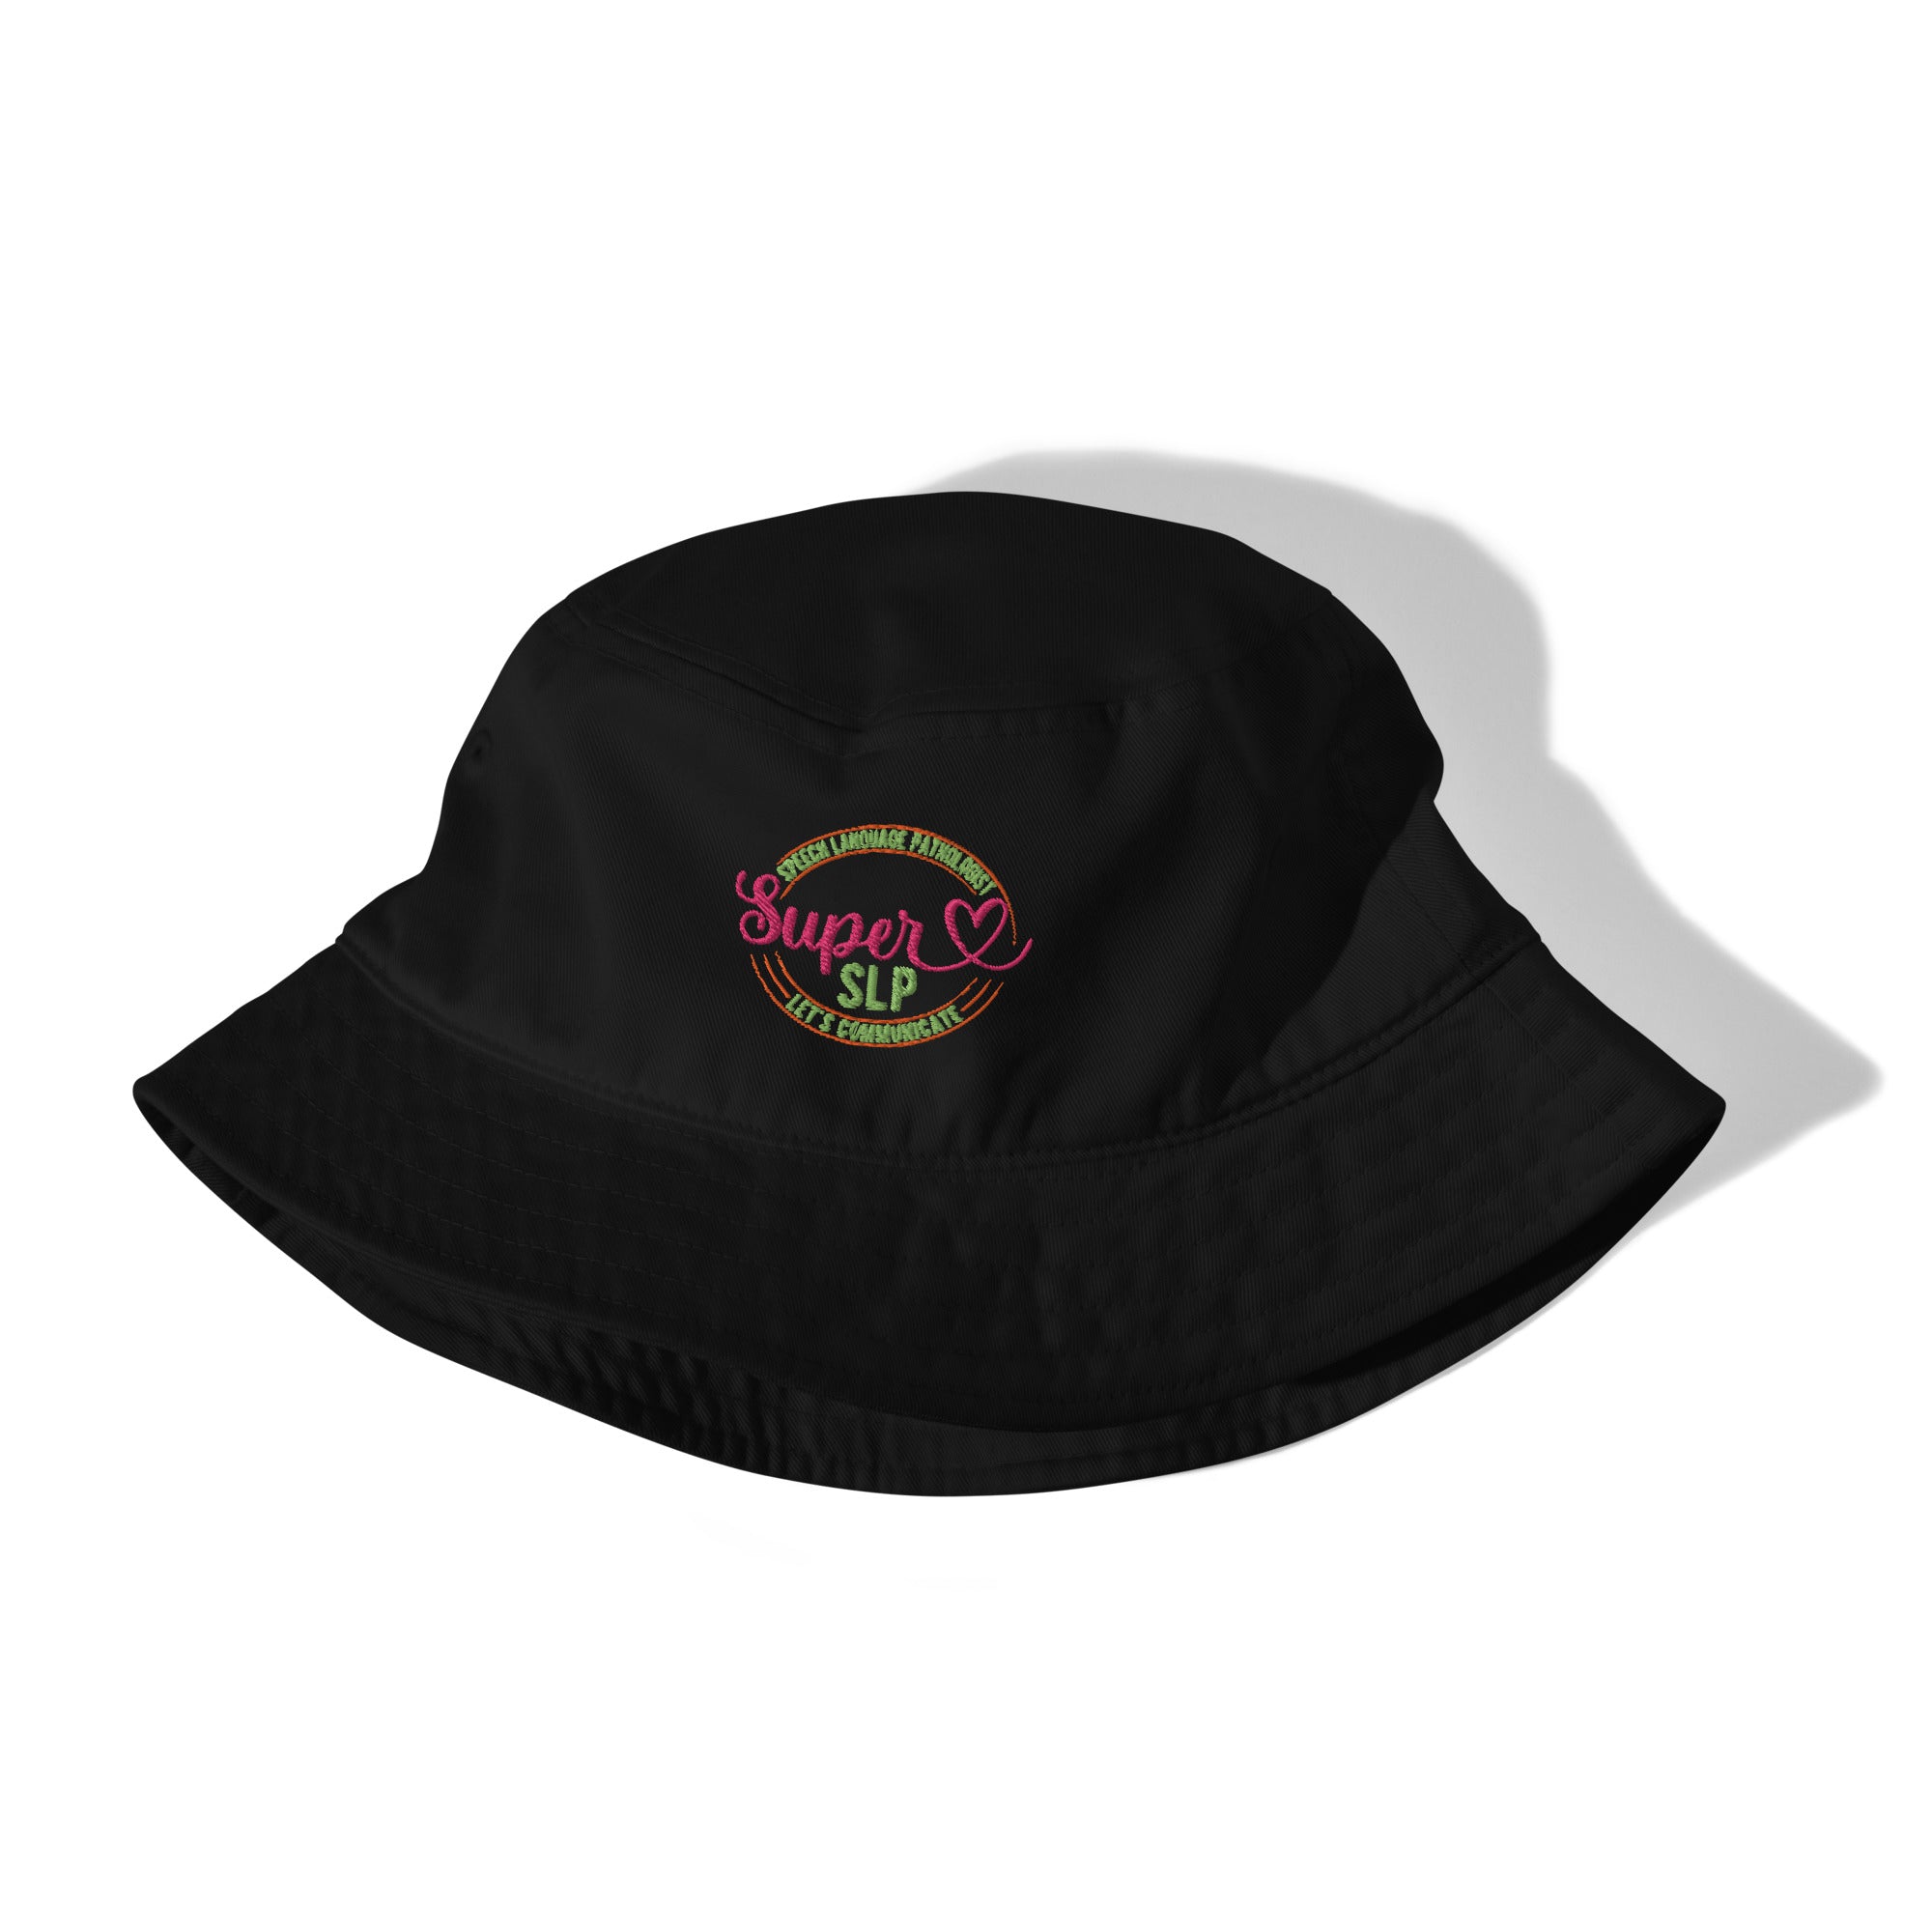 Super Stylish SLP Bucket Hat